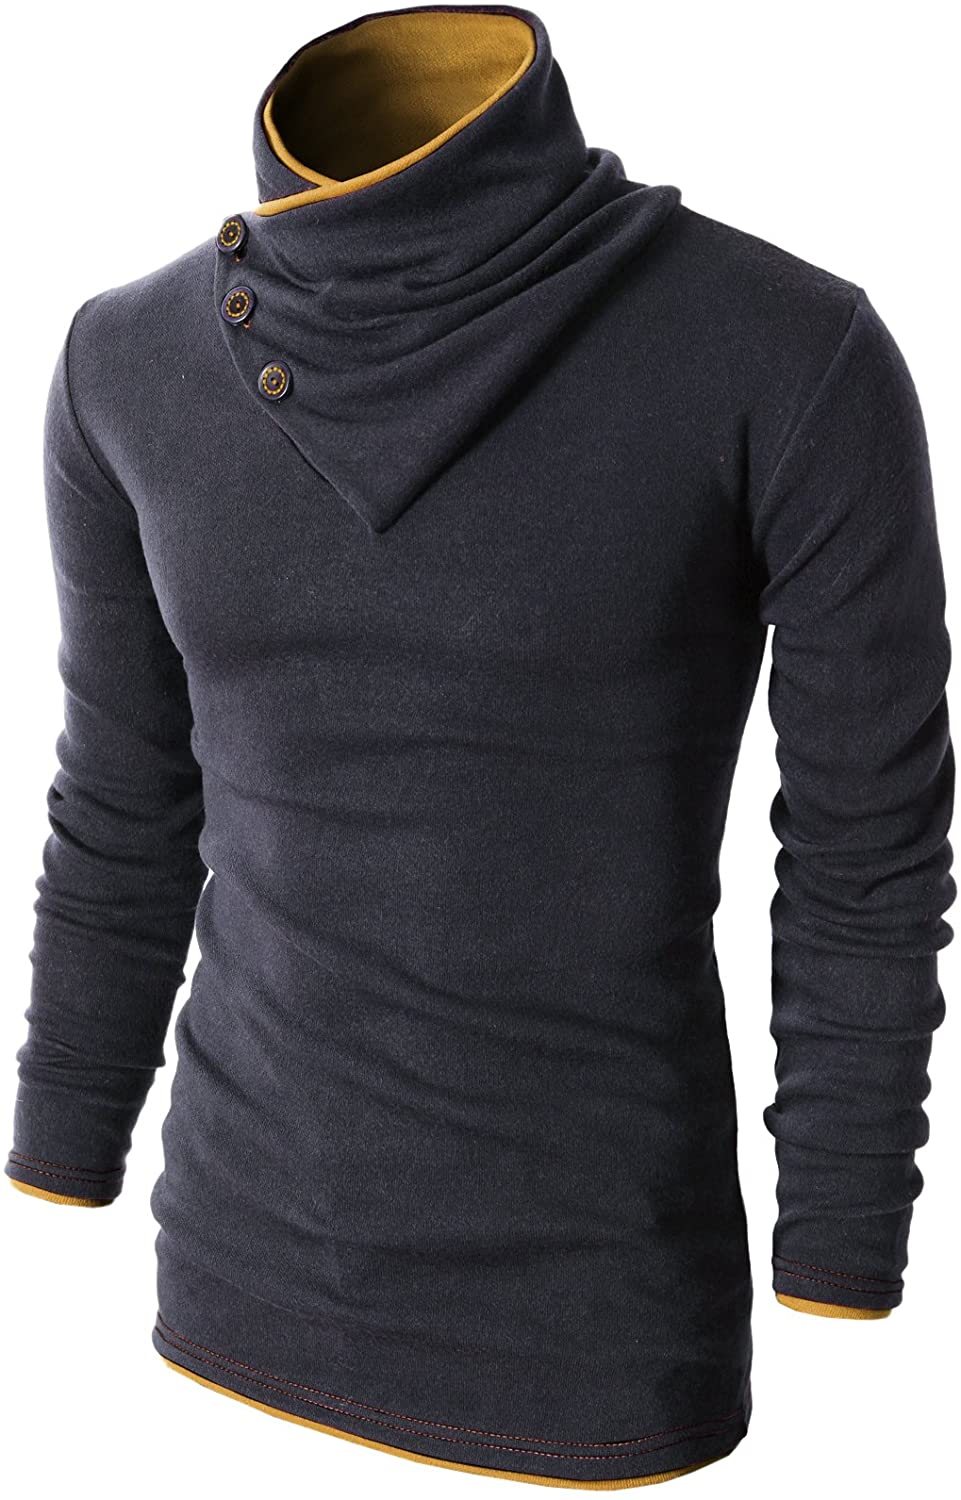 HTOOHTOOH Mens Long-Sleeved Casual Mock Neck Jumper Knitwear Pullover Sweaters 